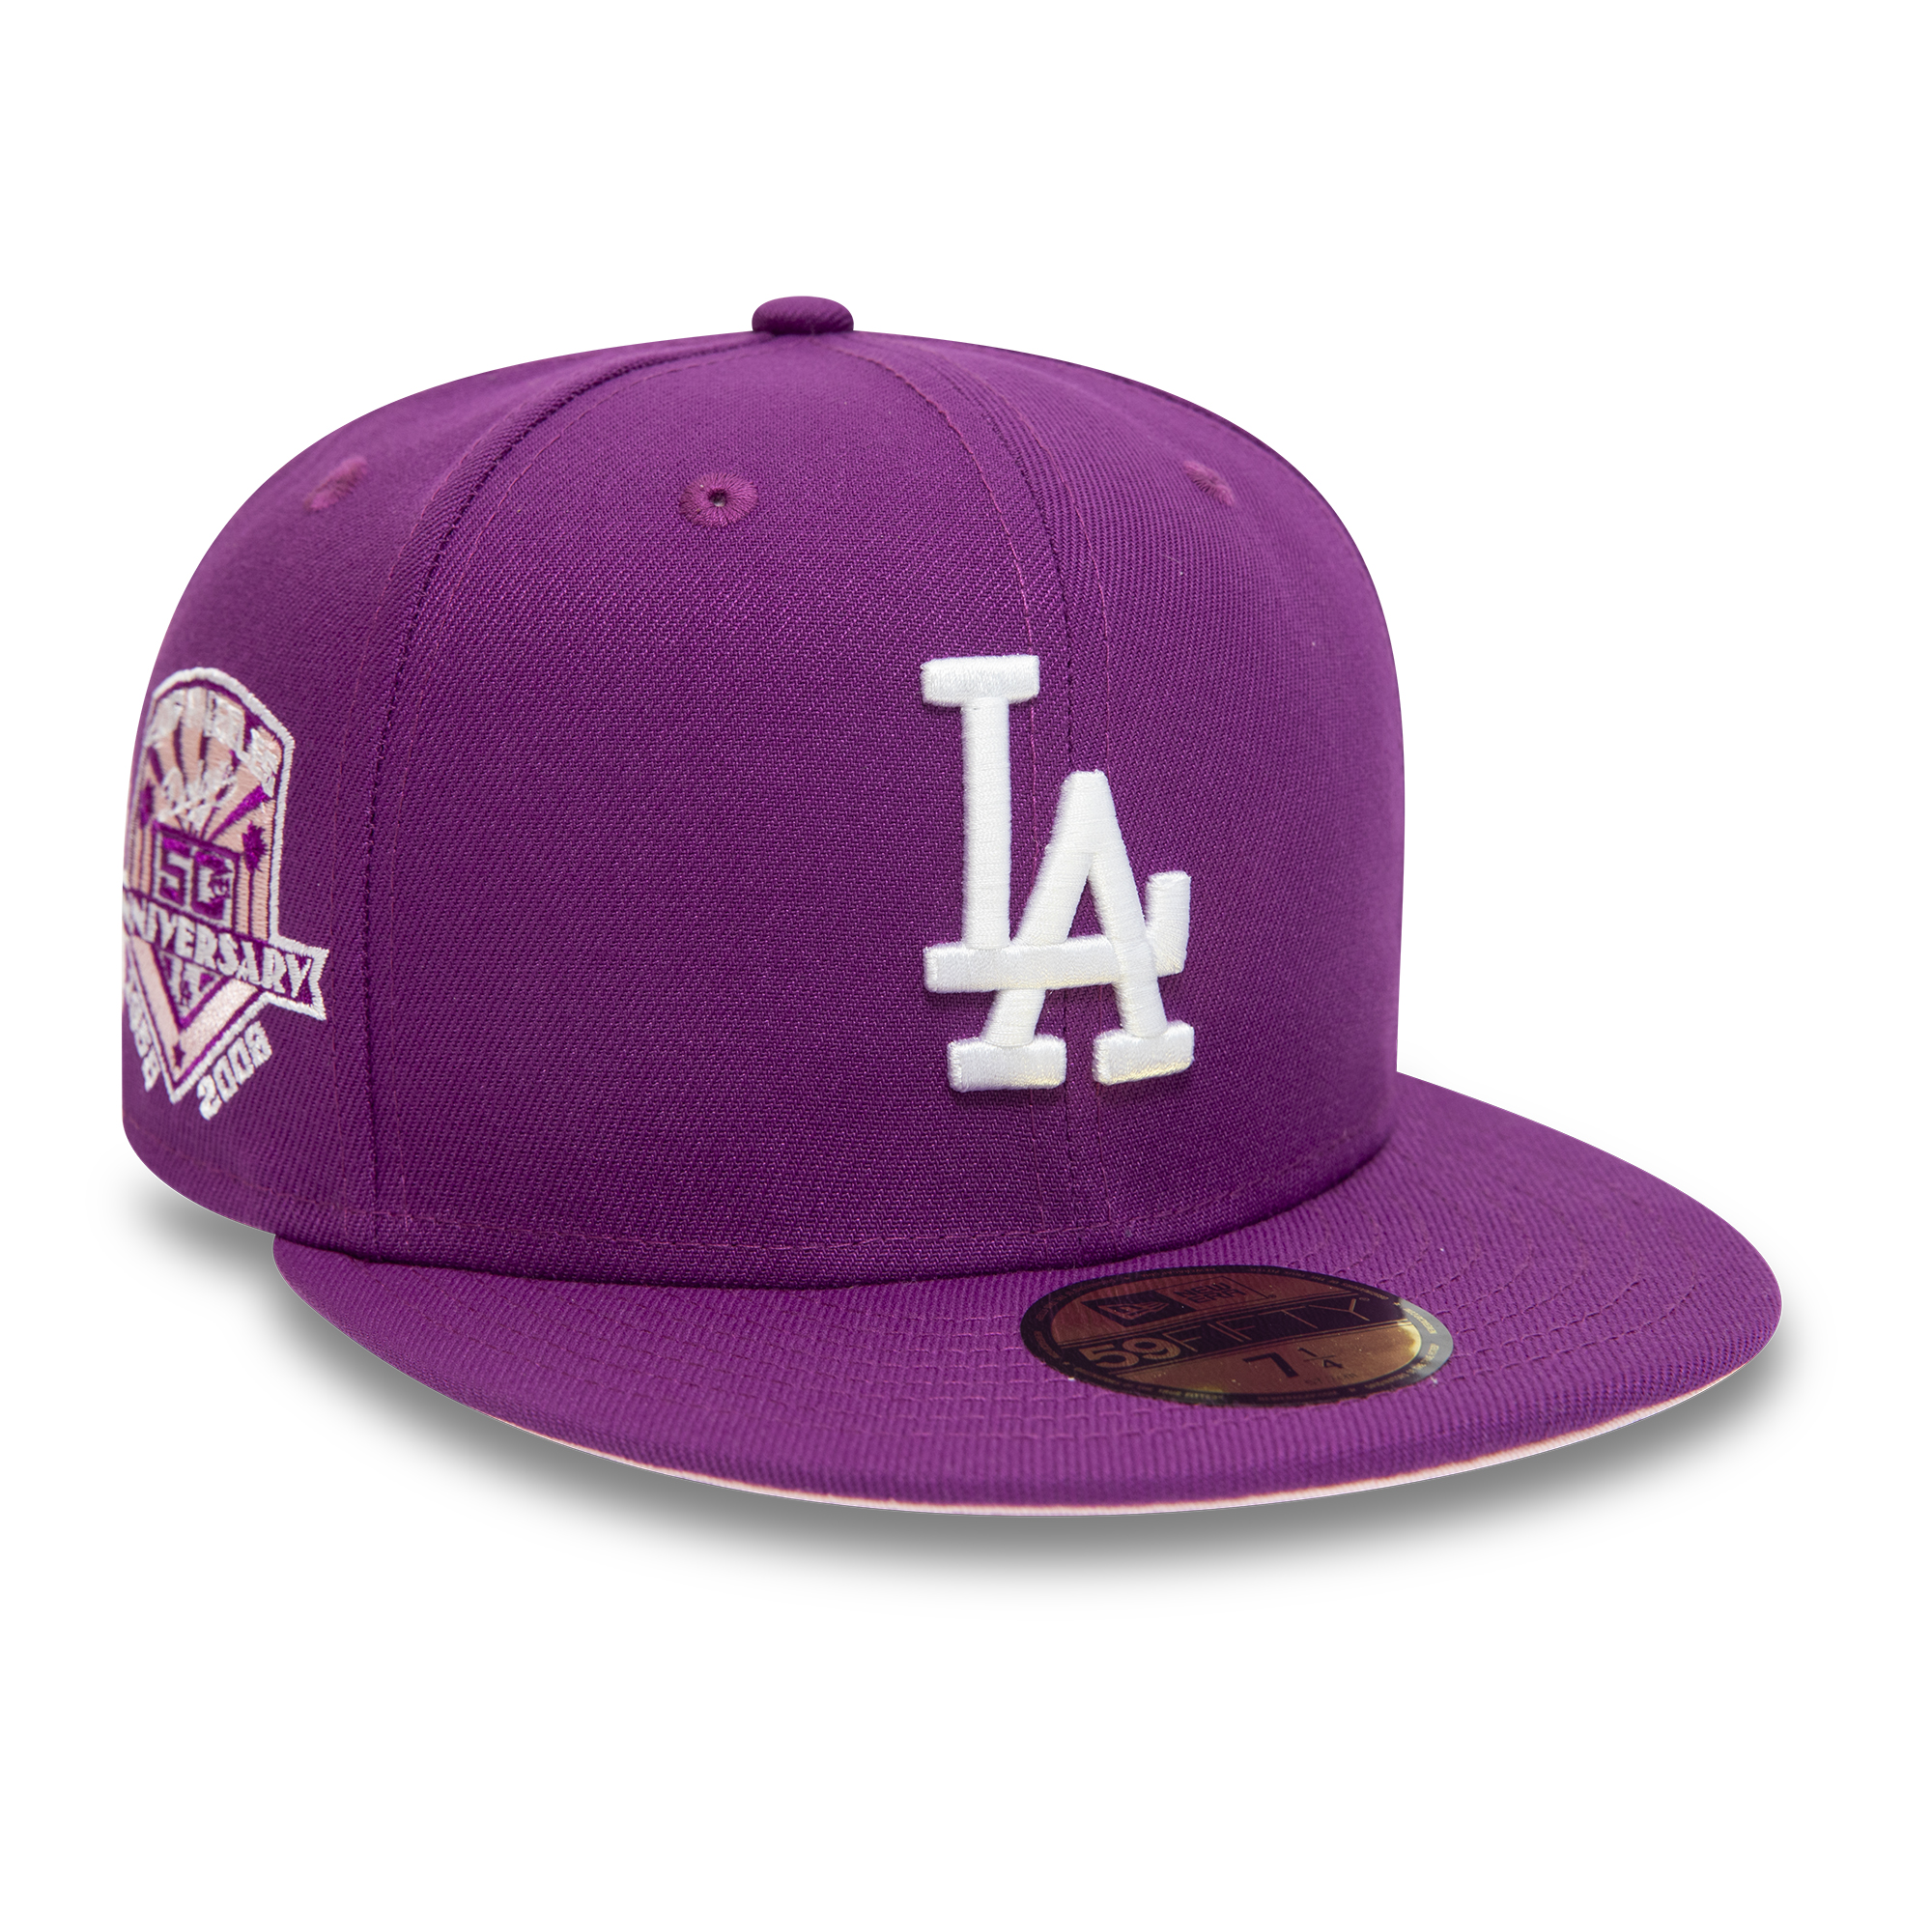 Official New Era LA Dodgers MLB Grape Purple 59FIFTY Fitted Cap B8330 ...